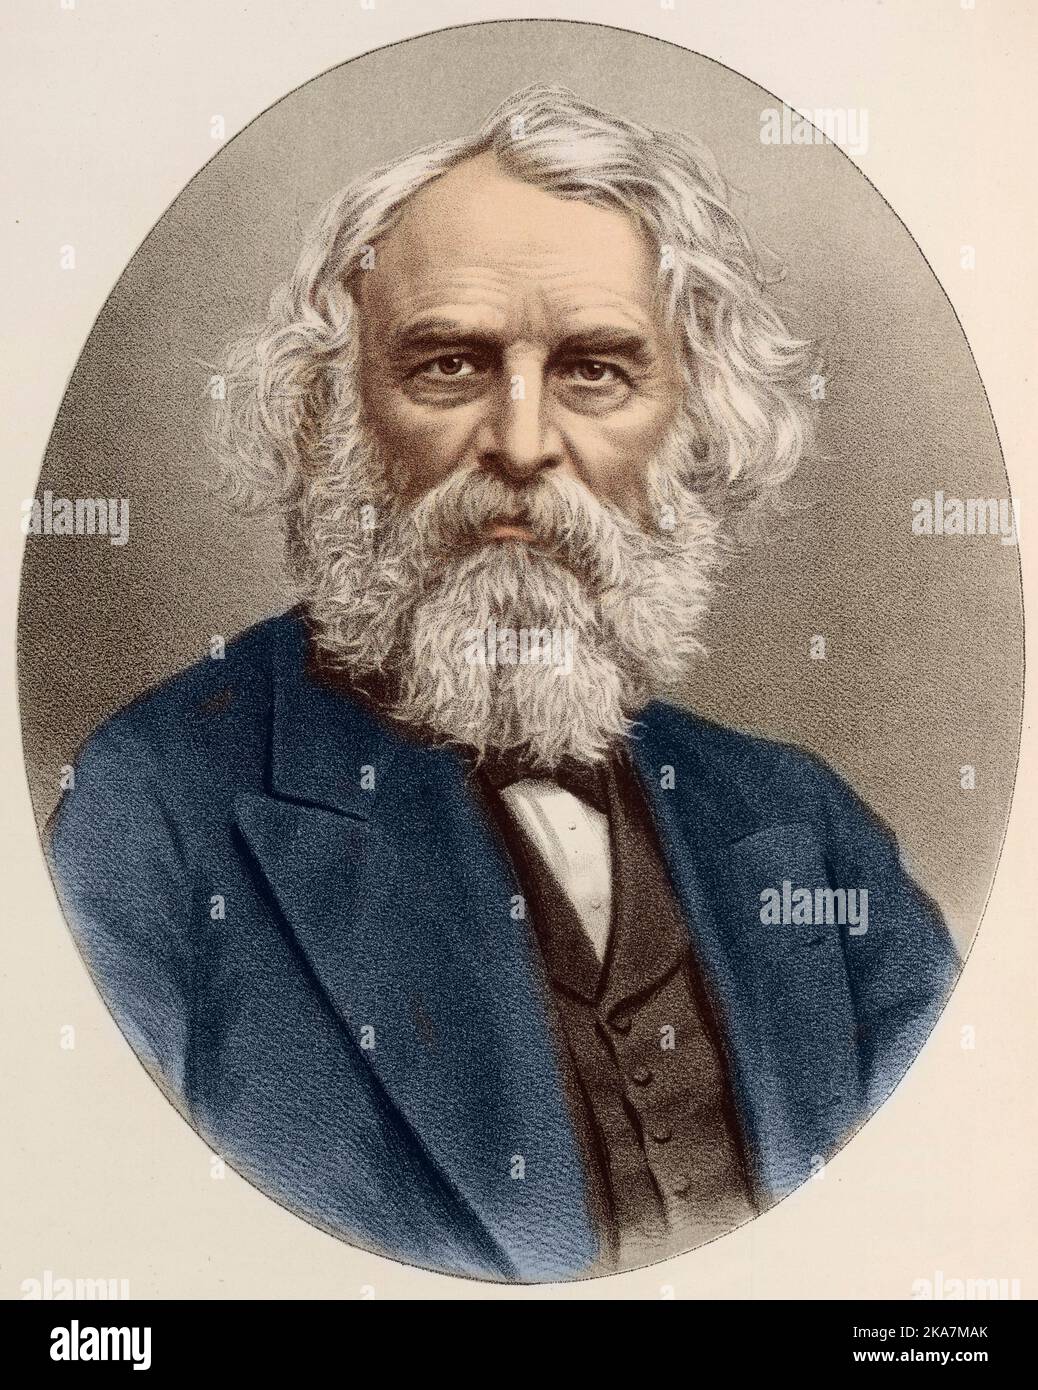 Portrait de Henry Wadsworth Longfellow (1807-1882), poete americain. Stockfoto